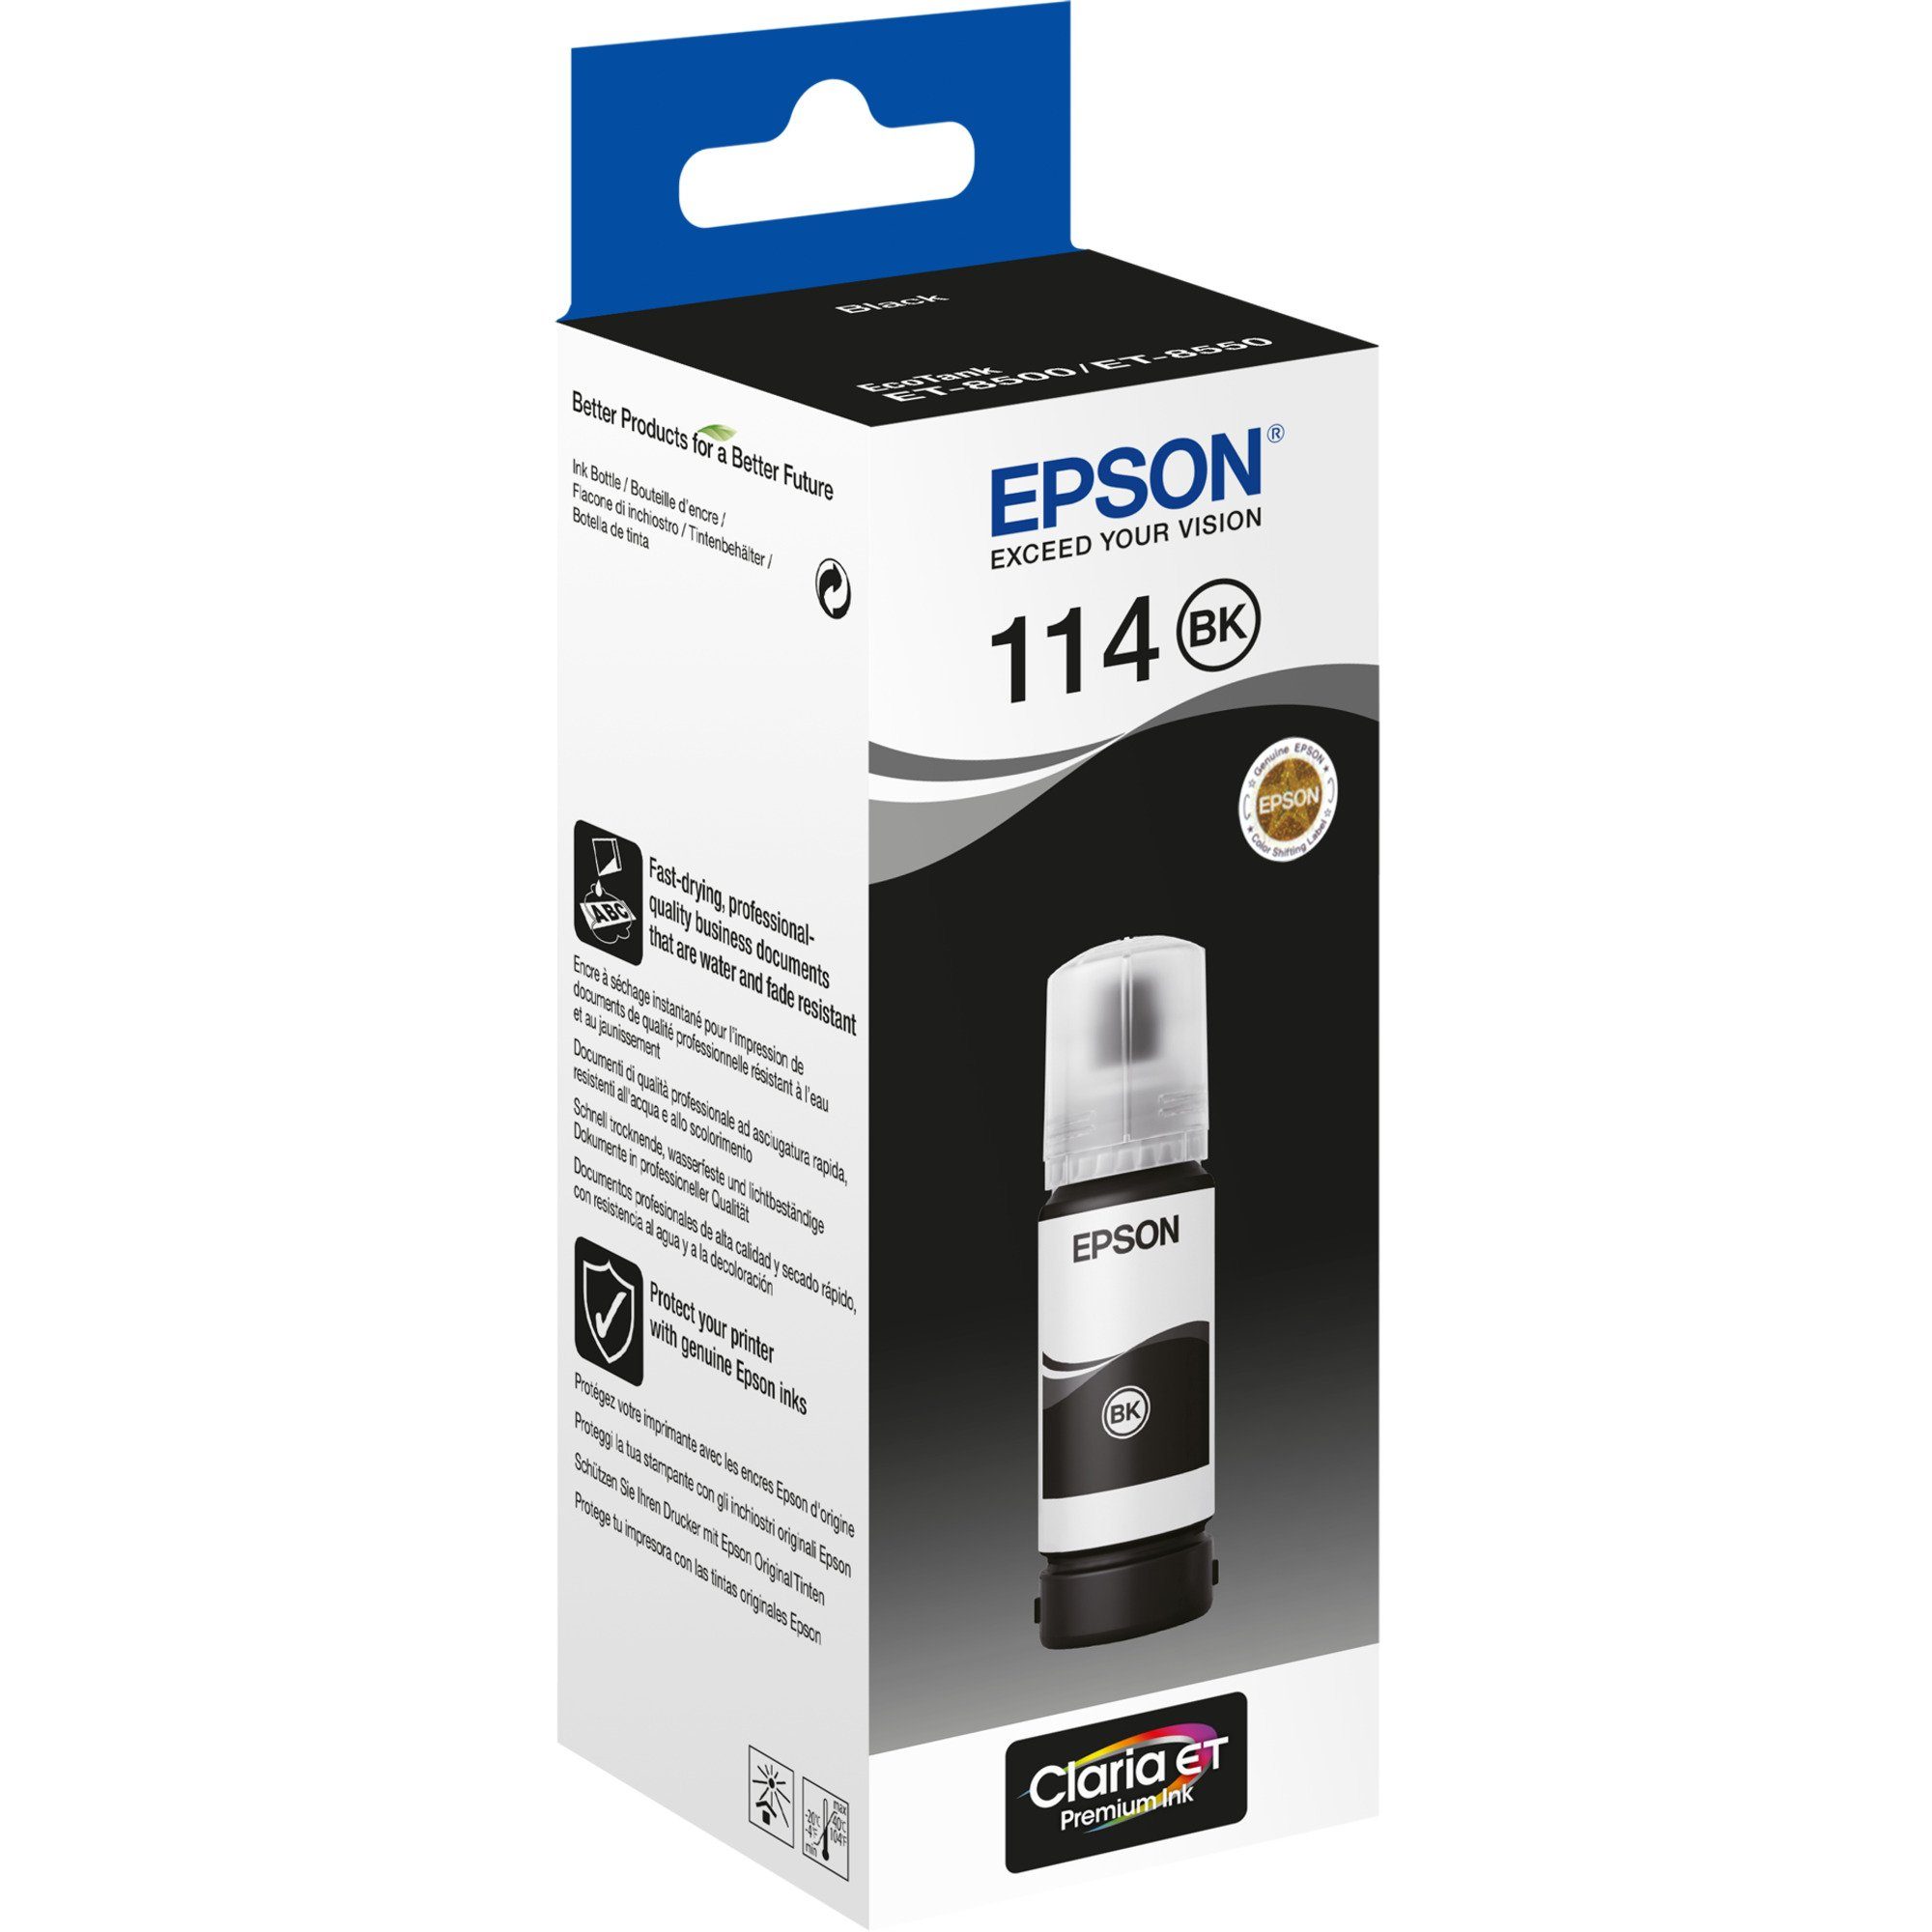 Epson Epson Tinte EcoTank Pigment-schwarz 114 pigment schwarz Tintenpatrone